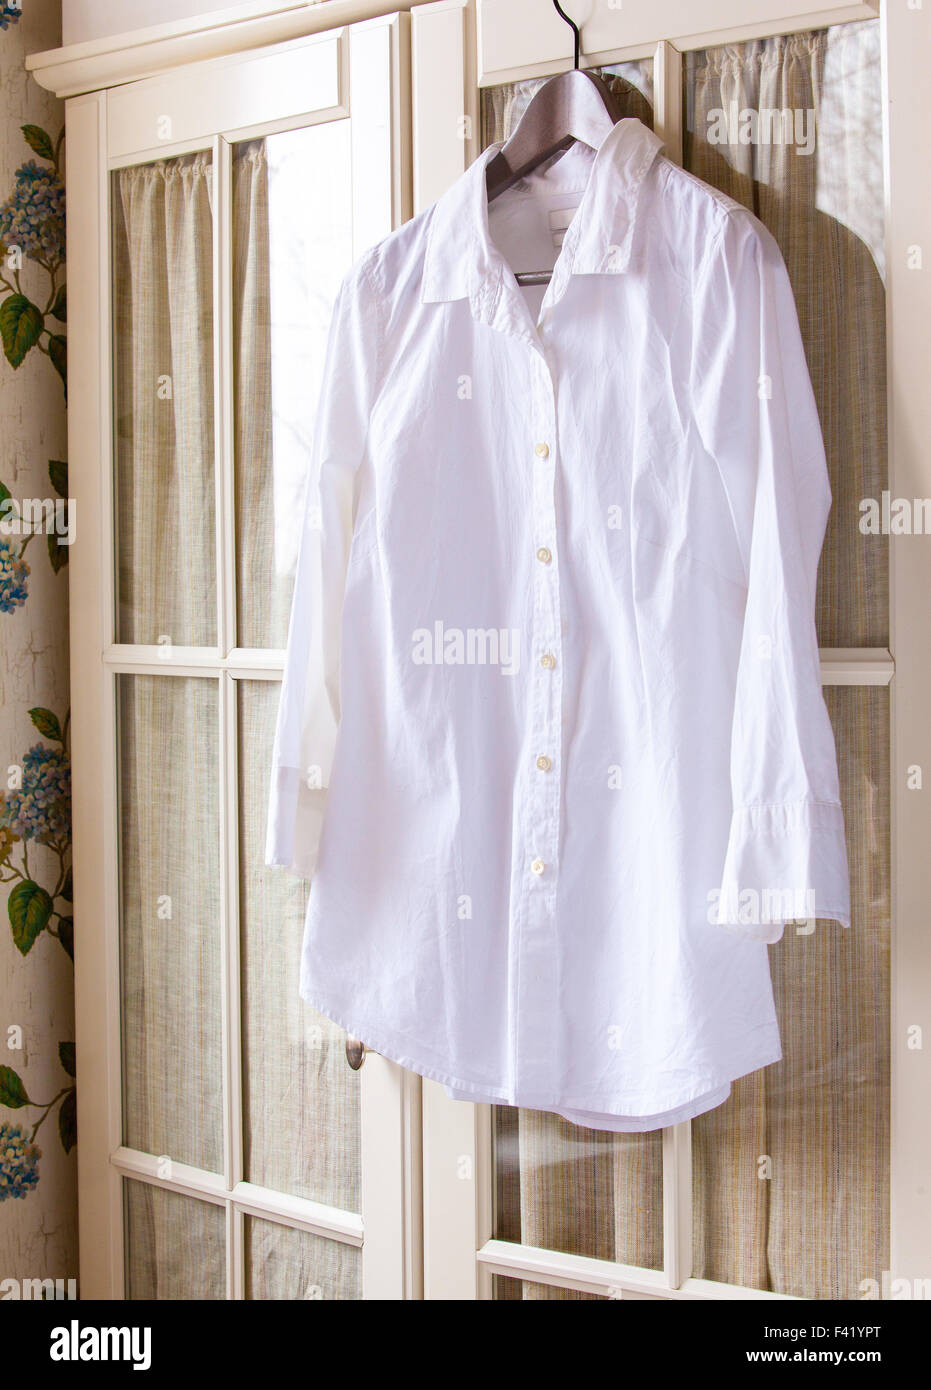 https://c8.alamy.com/comp/F41YPT/white-cotton-shirt-on-a-hanger-F41YPT.jpg